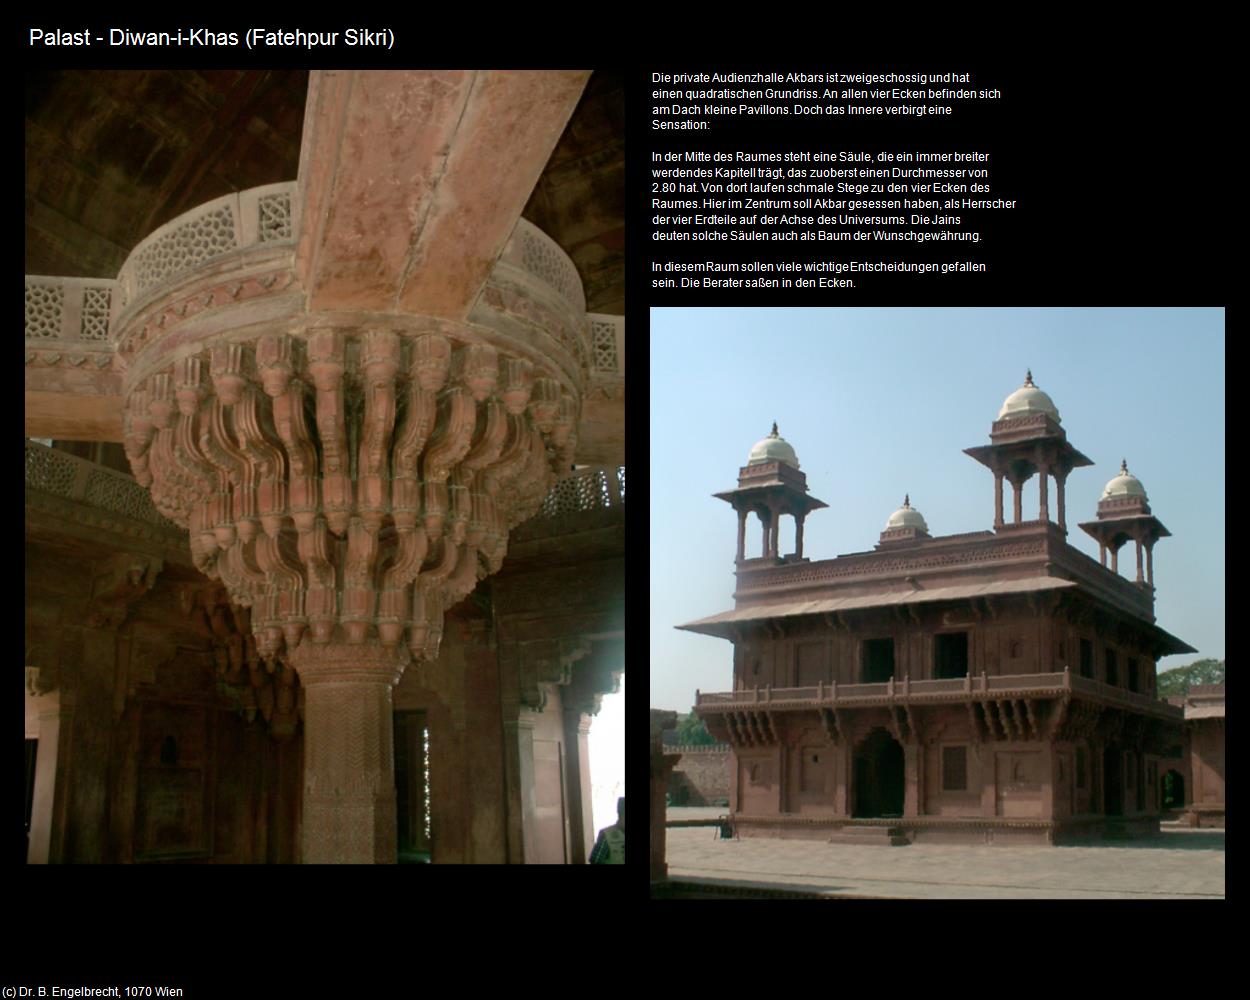 Palast - Diwan-i-Khas (Fatehpur Sikri) in Rajasthan - das Land der Könige